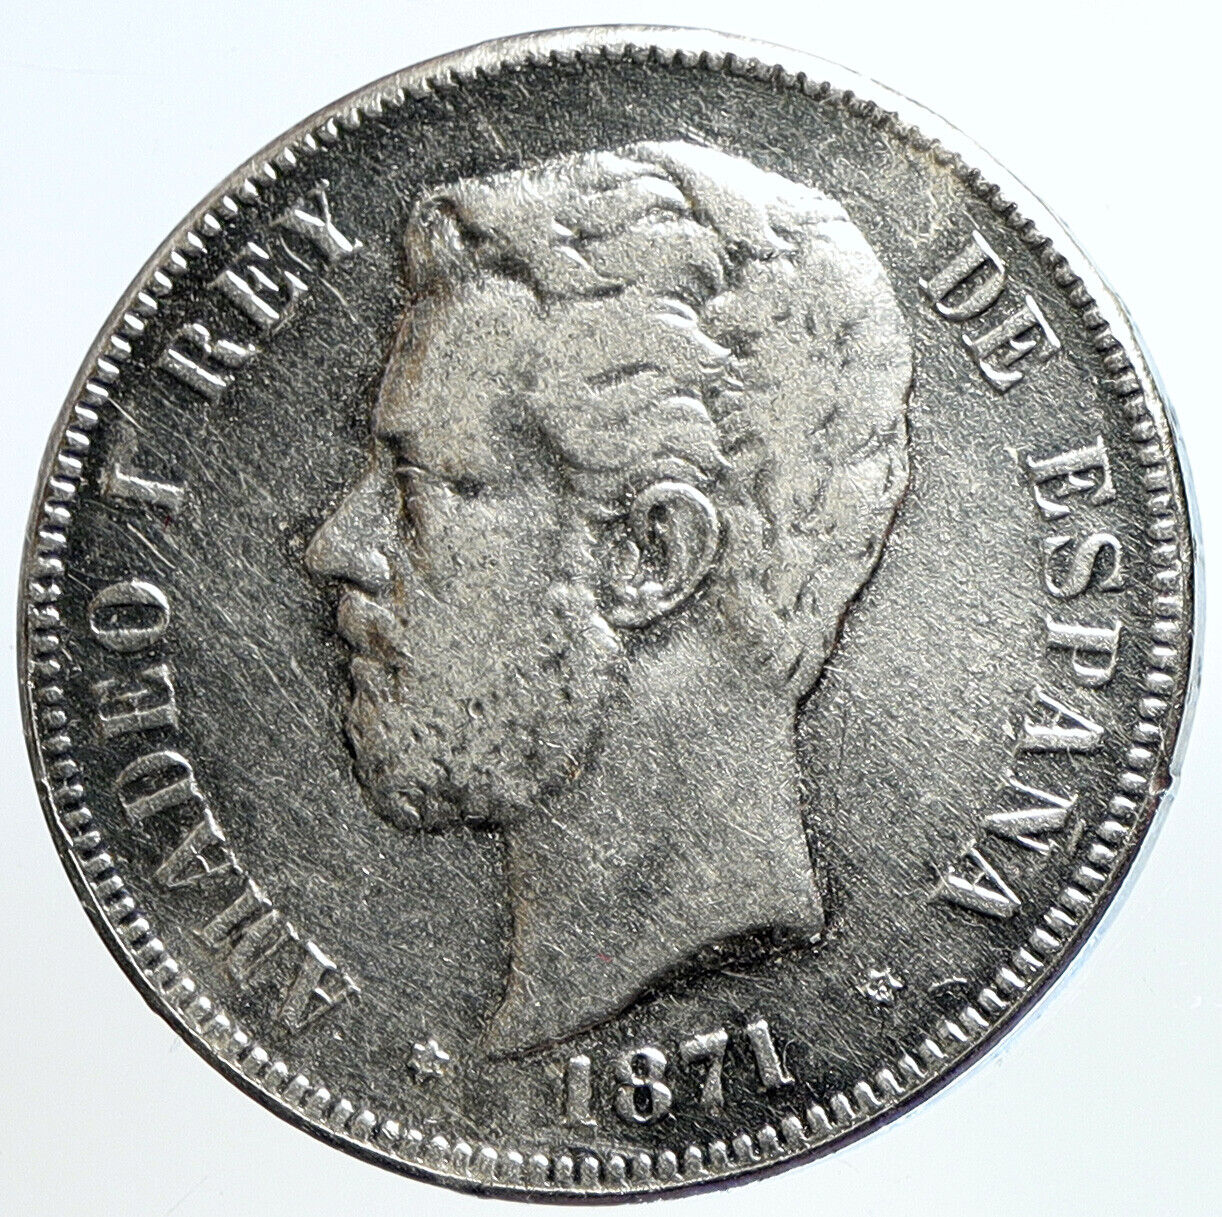 1871 SPAIN w King Amadeo I Amadeus Antique Silver 5 Pesetas Spanish Coin i113441